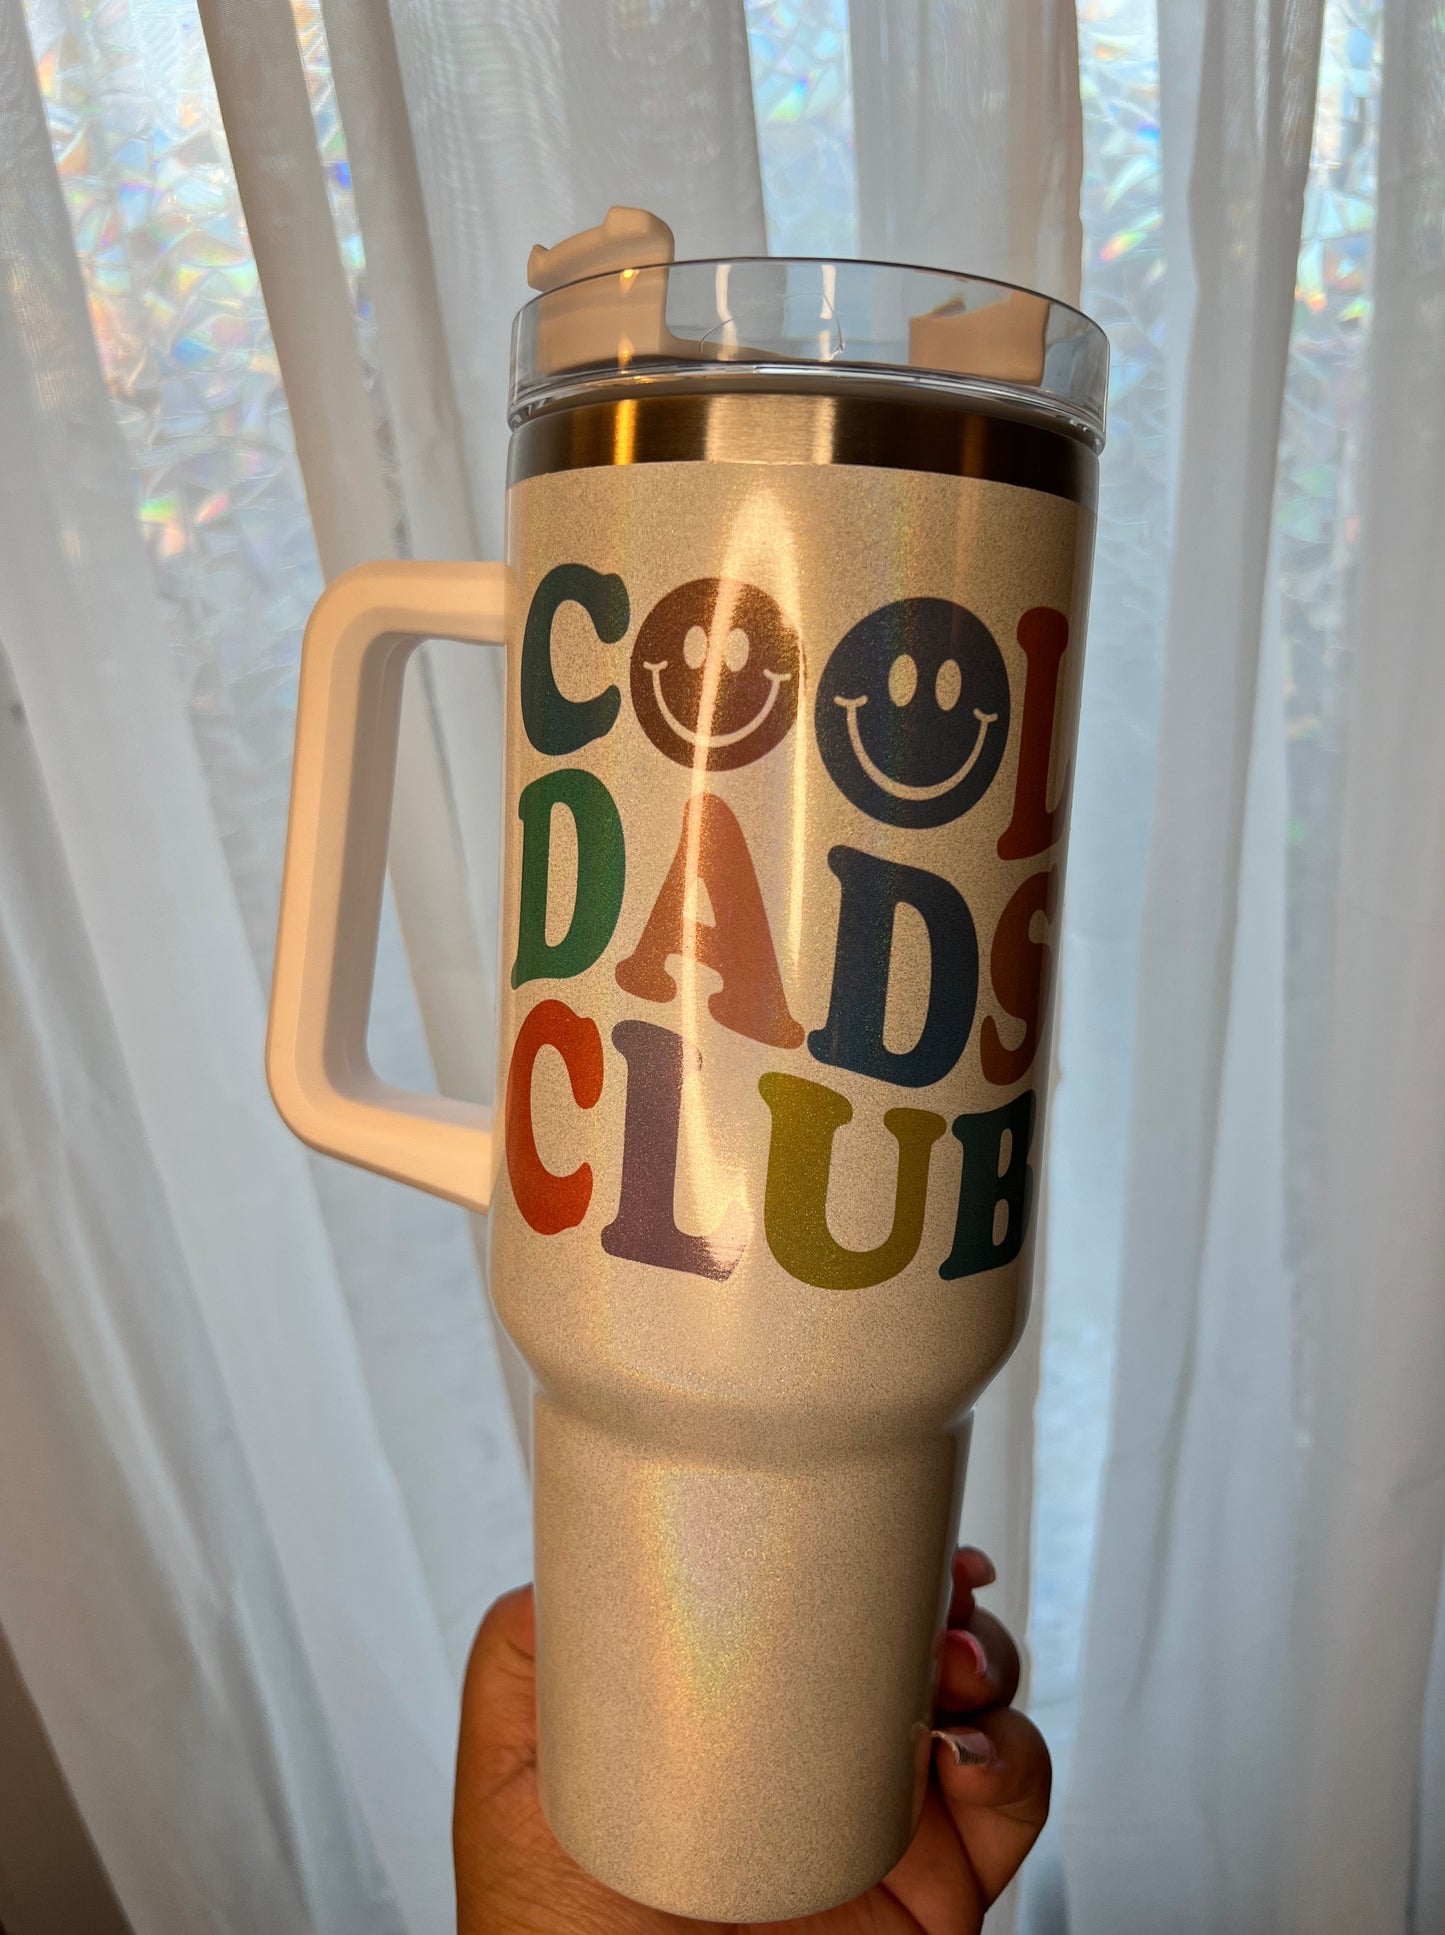 Cool Dads Club 40oz Tumbler